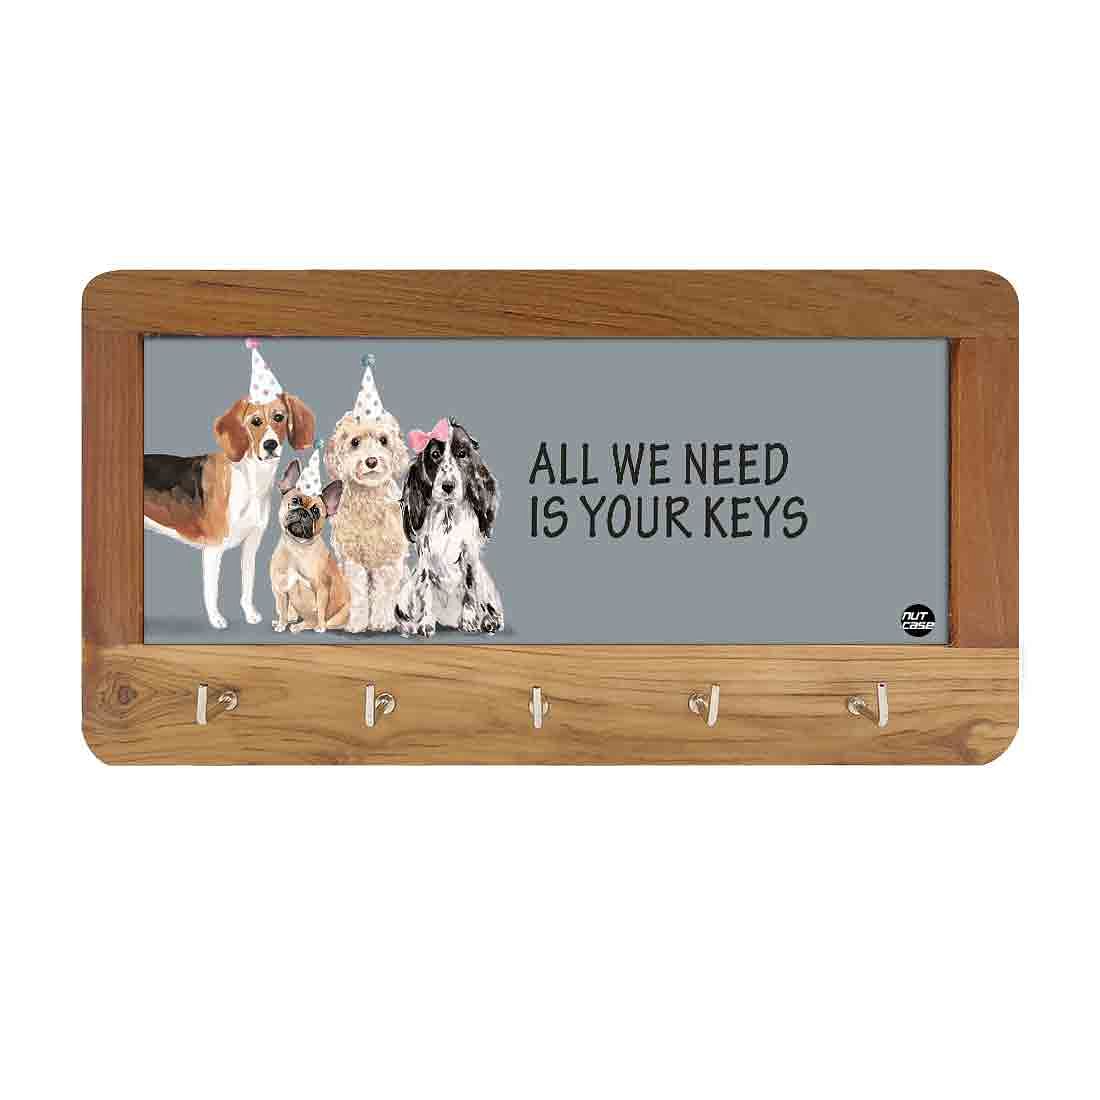 Keys Stand Hanger for Key Holder Wall Decor - Need Keys Nutcase